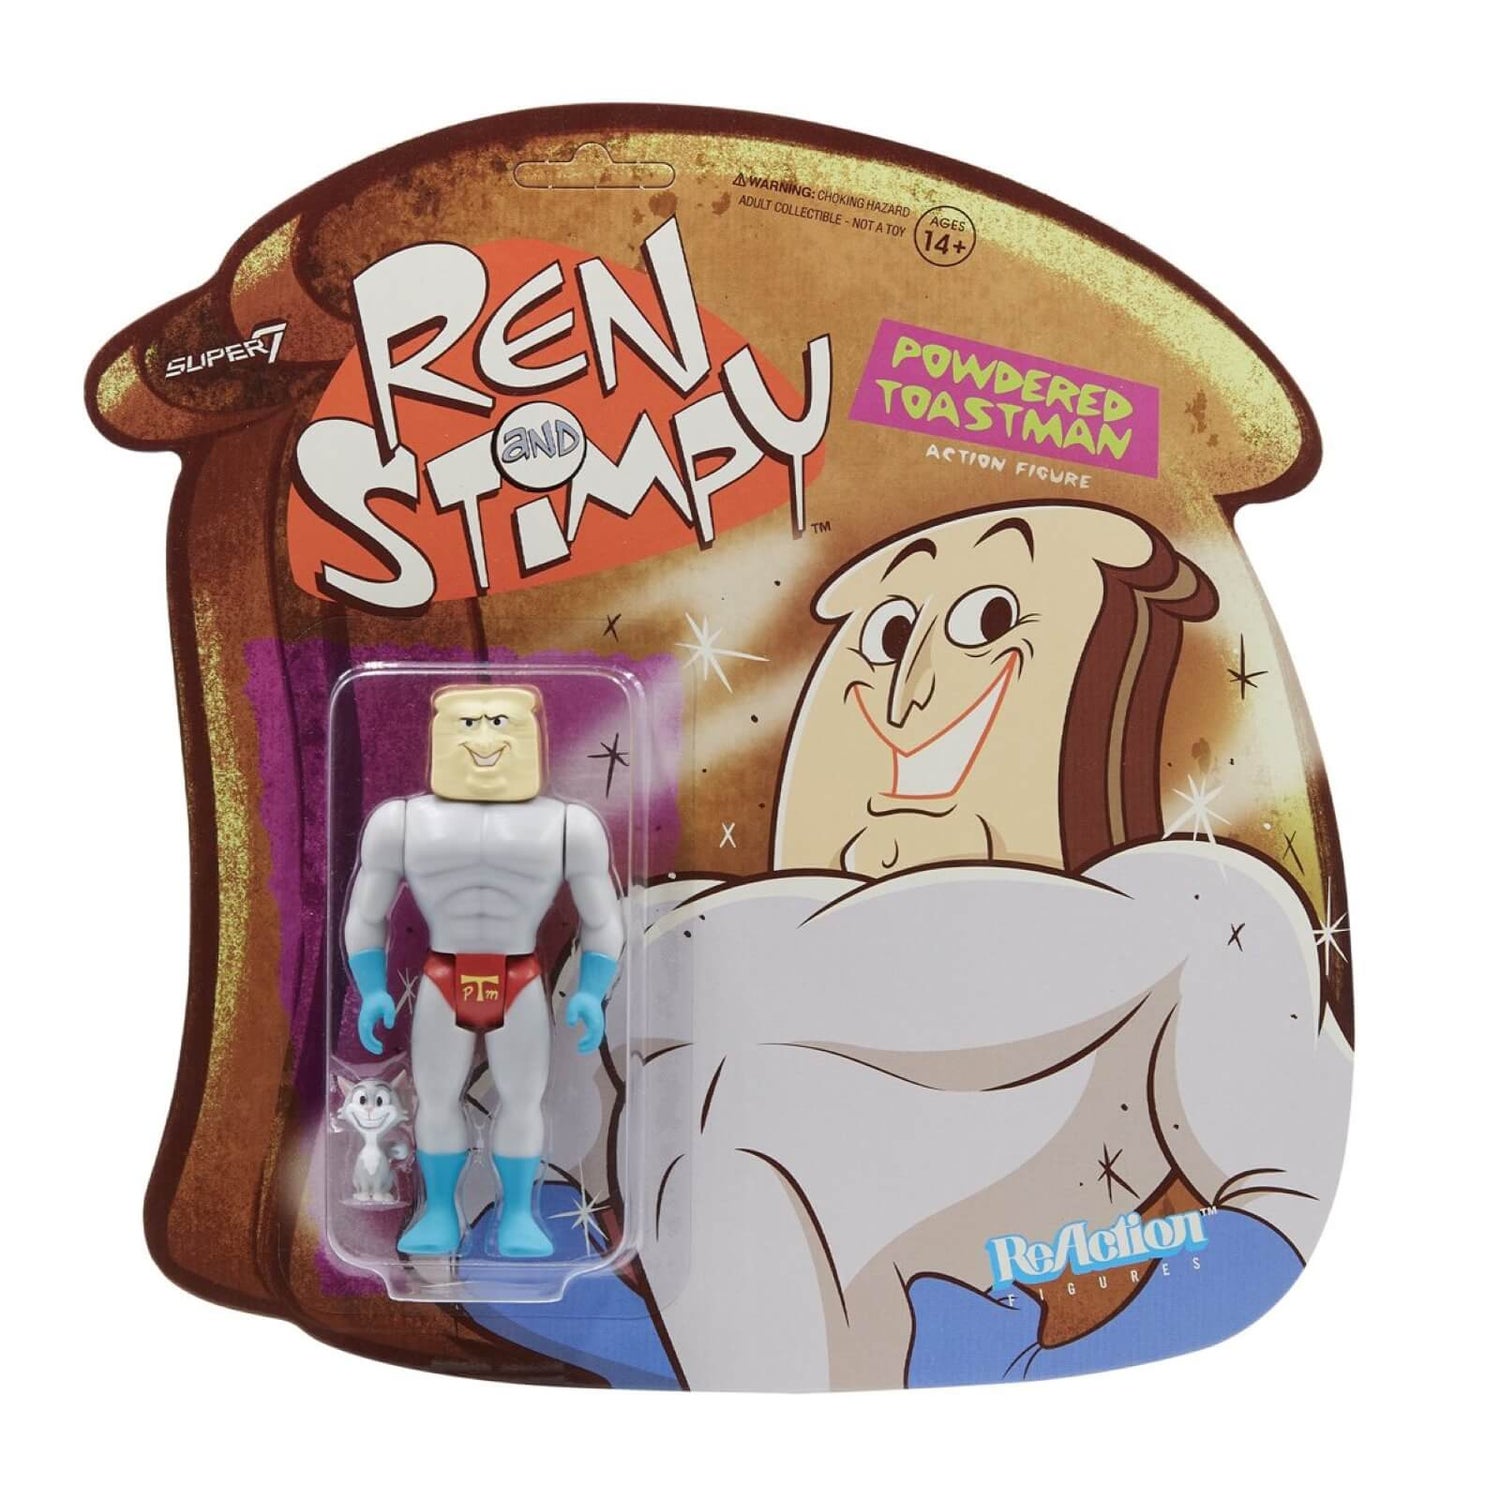 Super7 Ren & Stimpy ReAction Figure - Powdered Toast Man